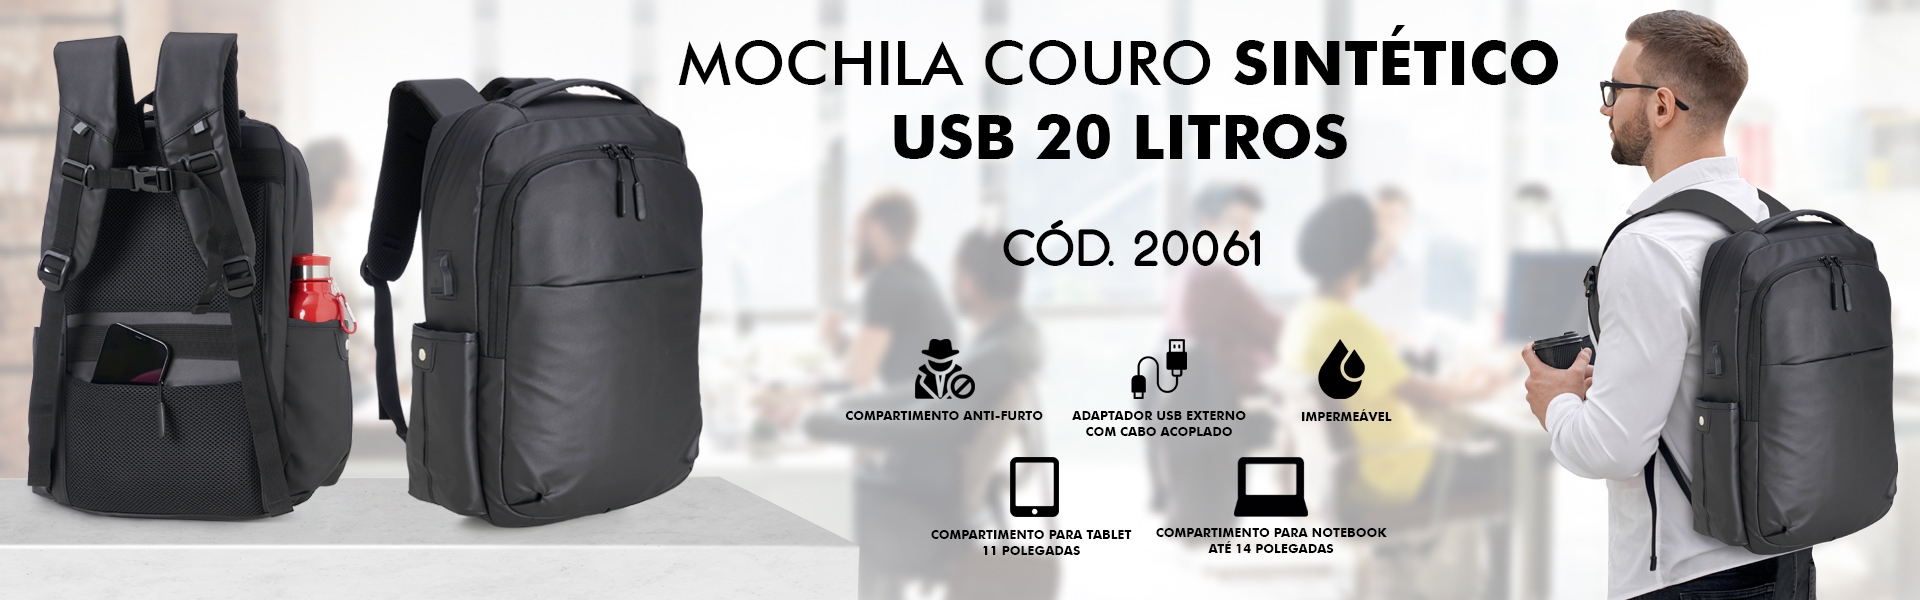 Mochila Couro Sintético USB 20 Litros 20061